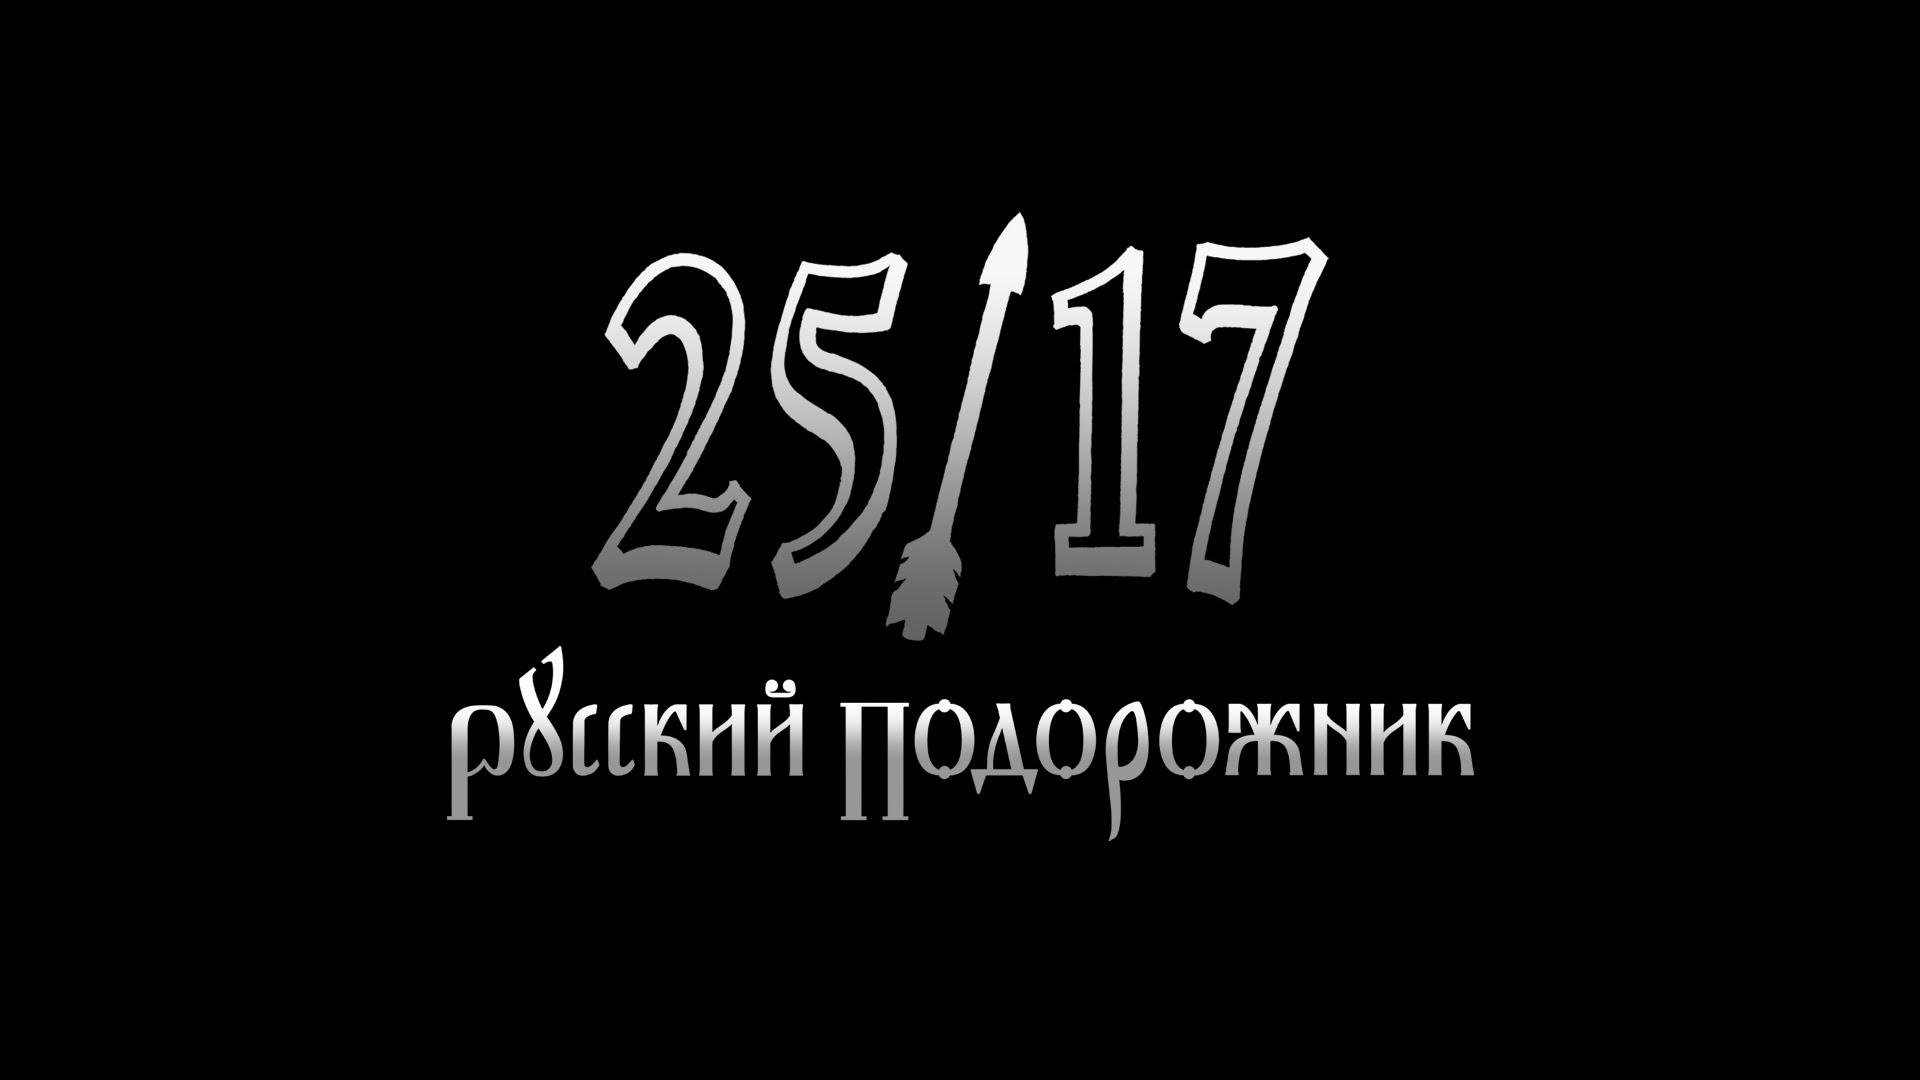 Канал 25 17. 2517 Русский подорожник. 25/17 Логотип группы. 25 17 Обои. 2517 Логотип.